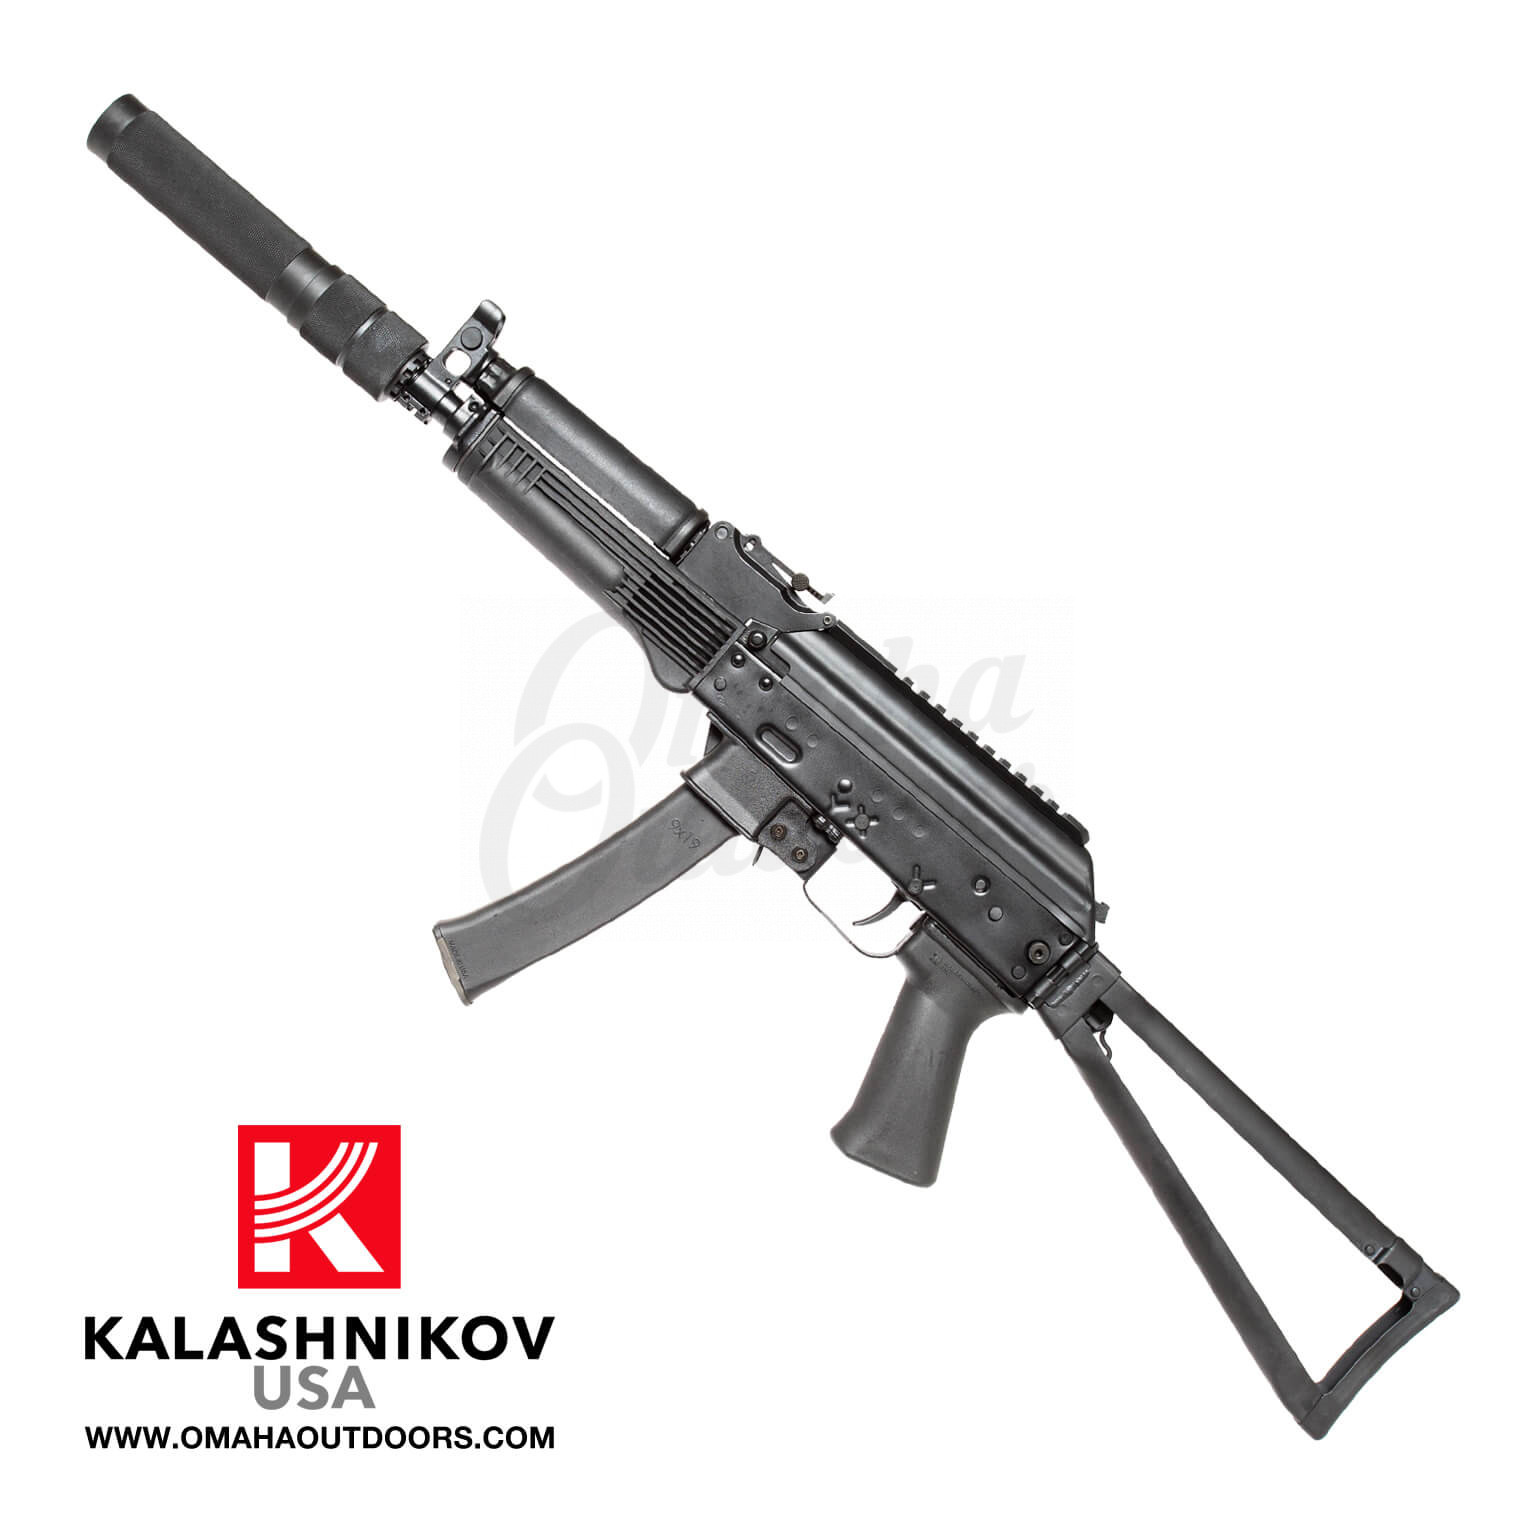 KR-9S - 9x19mm RIFLE WITH FAUX SUPPRESSOR - Kalashnikov USA